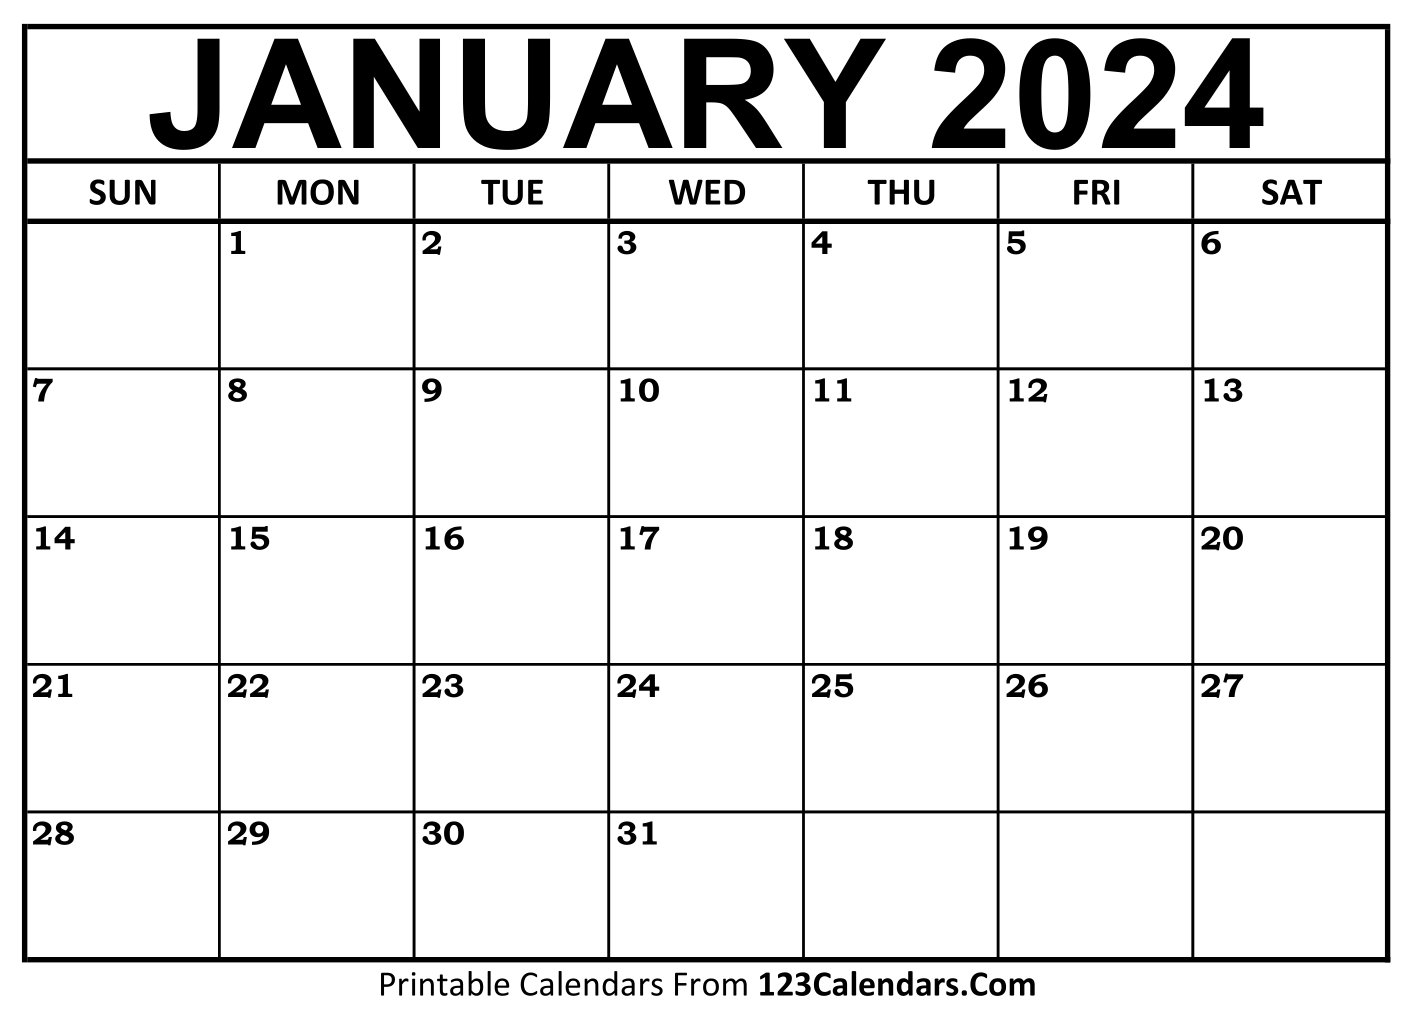 Printable January 2024 Calendar Templates - 123Calendars for Free Printable January 2024 Calendar Page